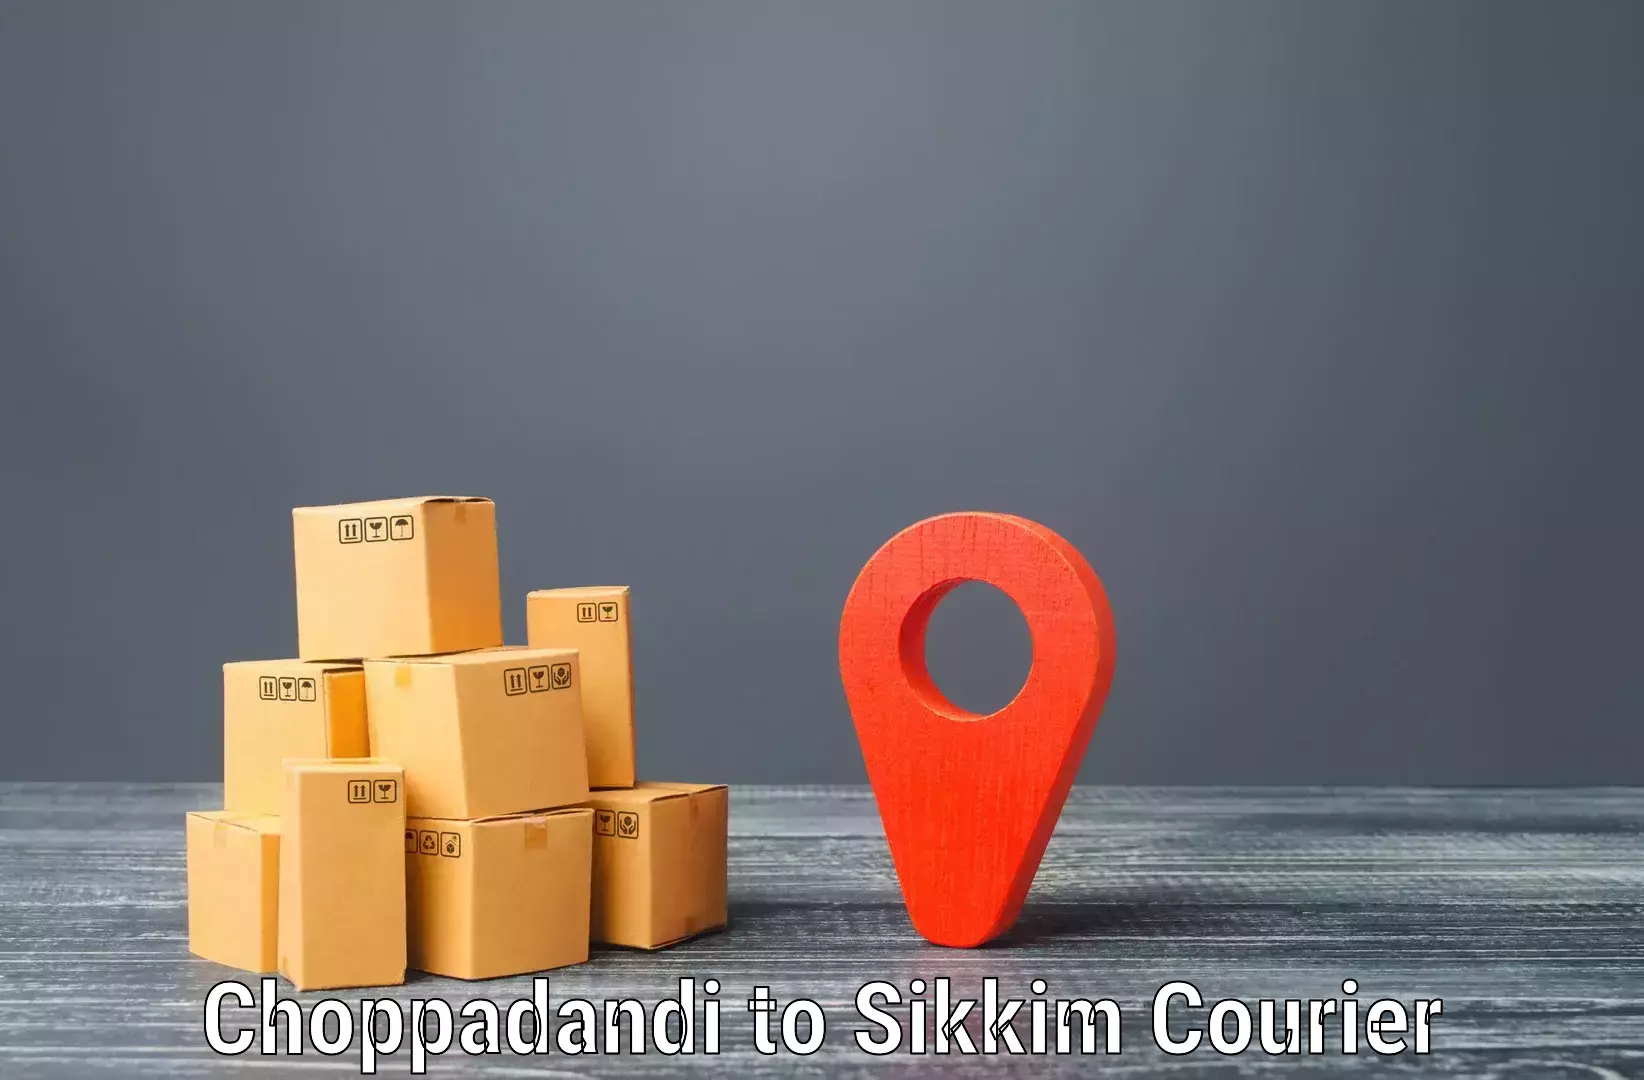 On-demand courier Choppadandi to Pelling